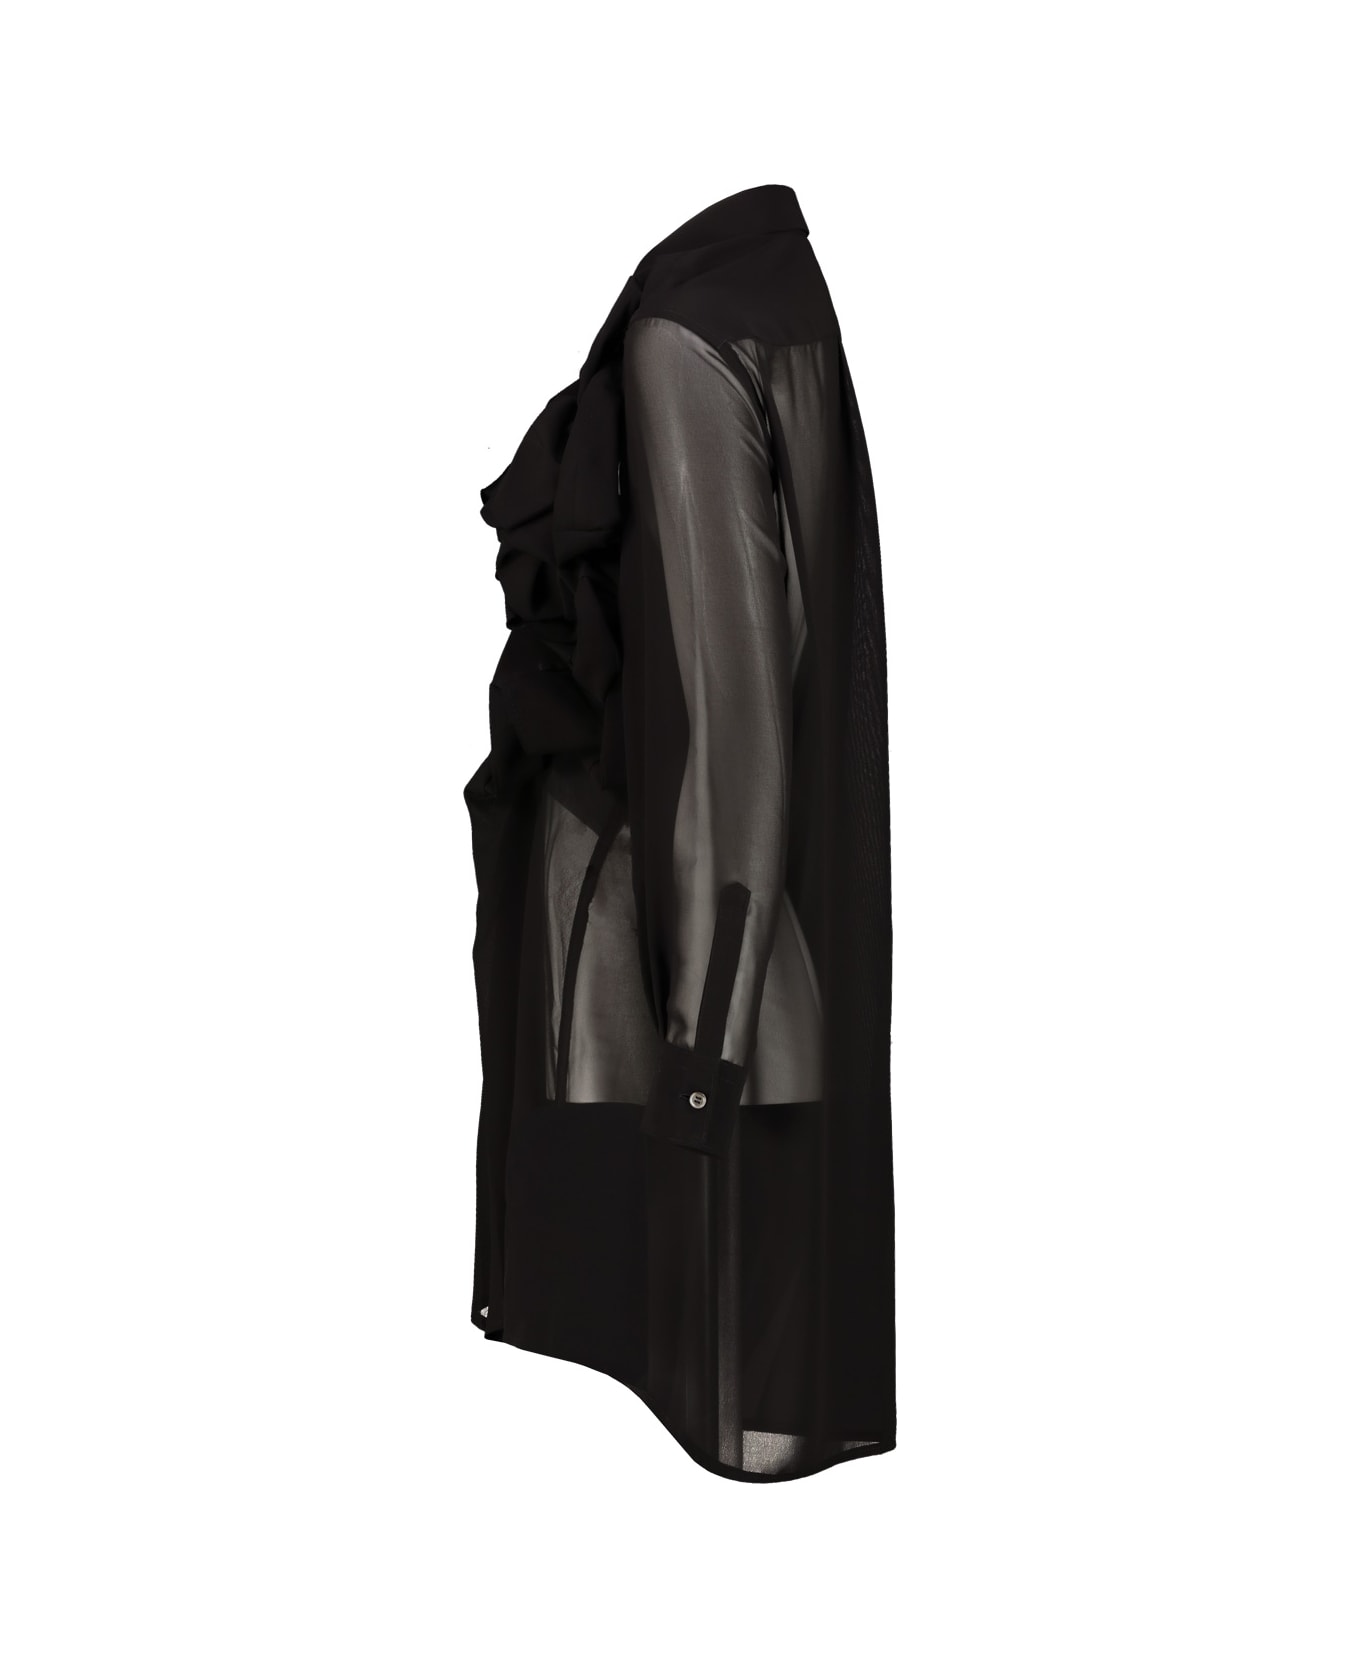 Comme des Garçons Shirt With Frontal Detail - Black